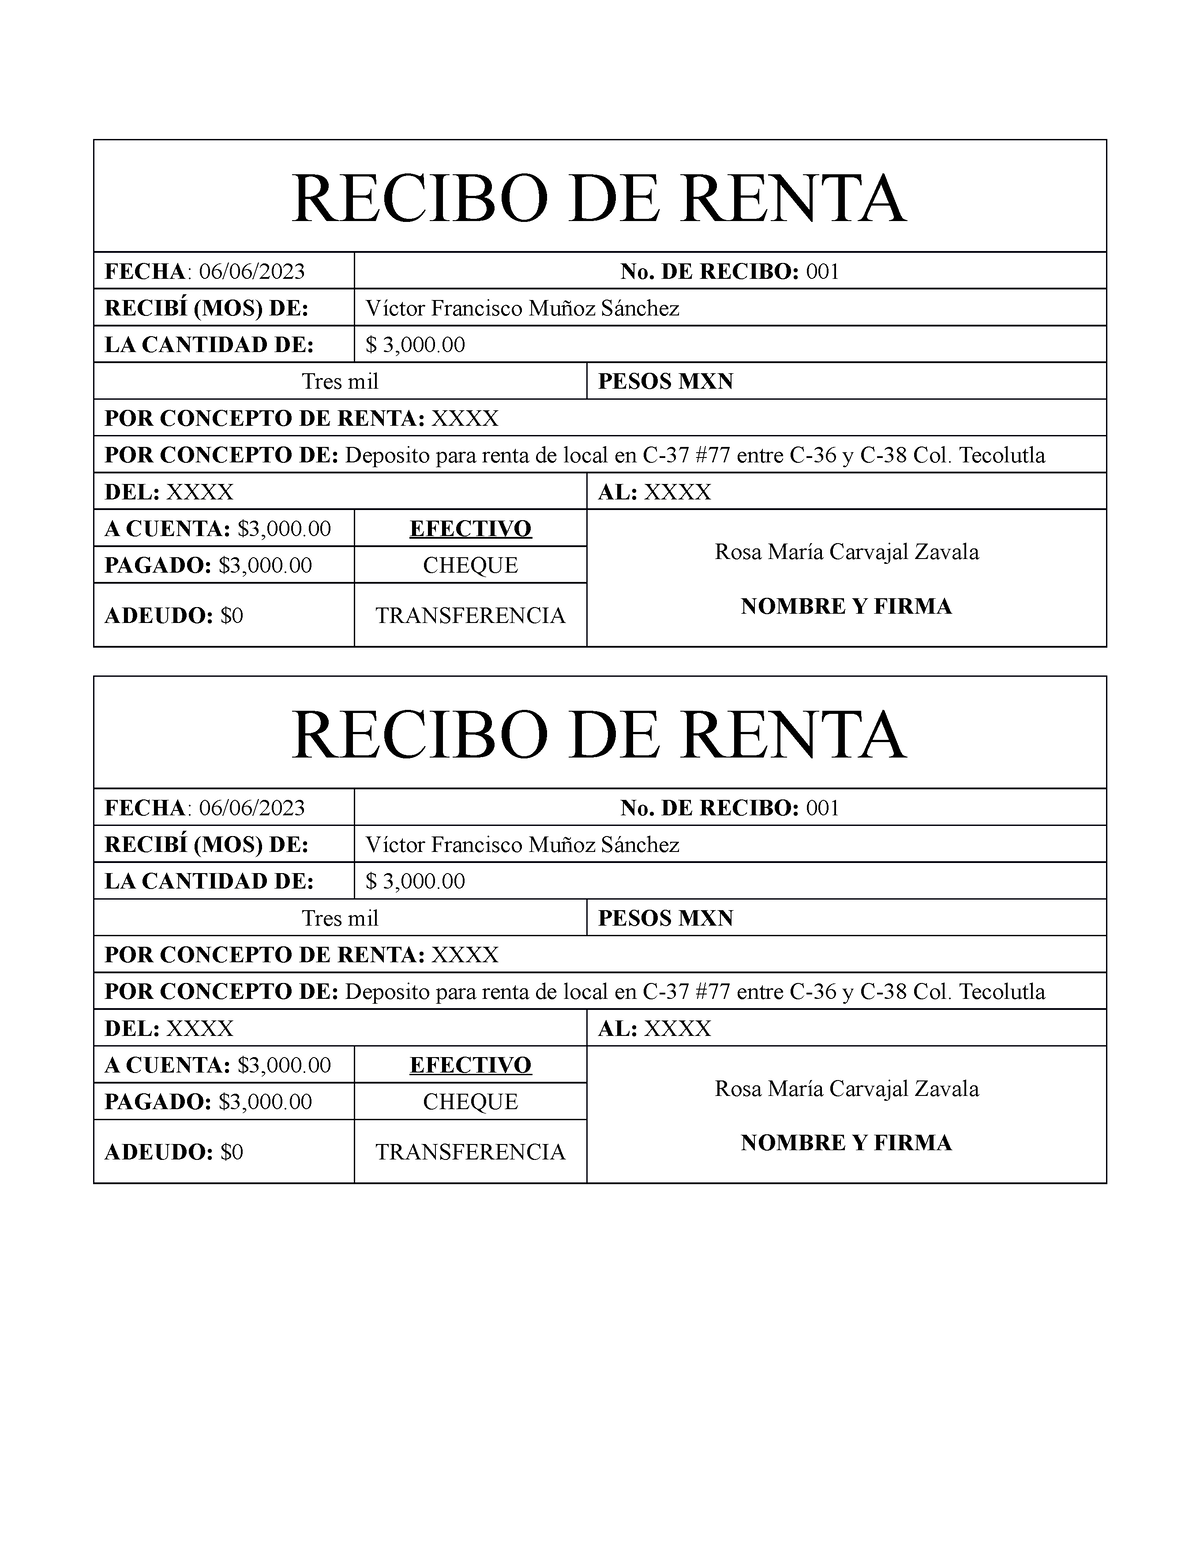 Ejemplo Recibo De Renta Recibo De Renta Fecha 06062023 No De Recibo 001 RecibÍ Mos De 4524